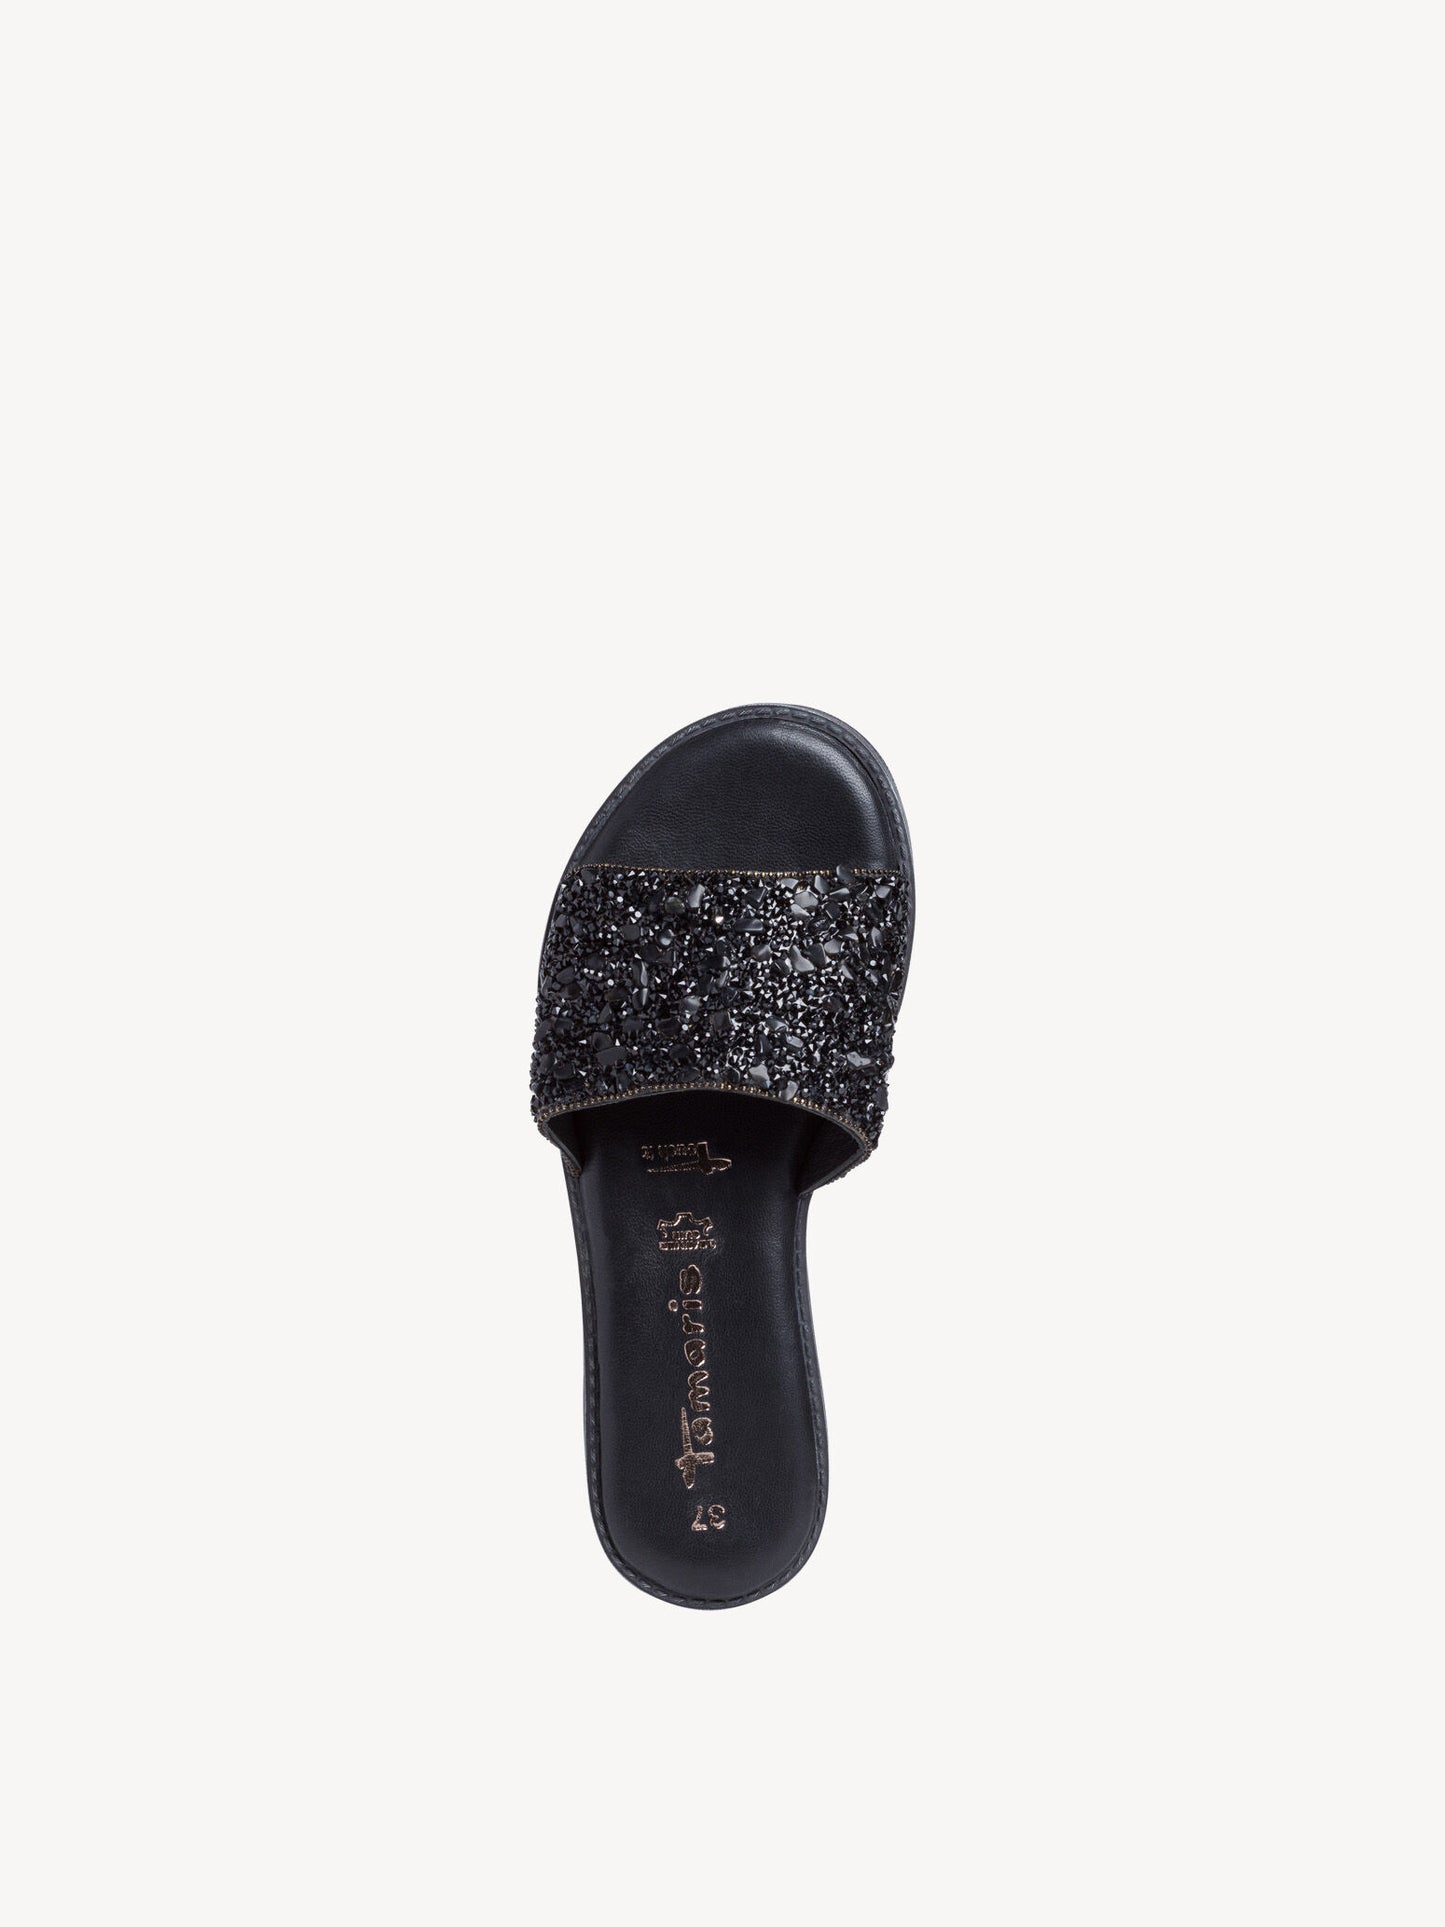 Tamaris Women's 1-27117-26 Leather Mule Sandals Black Glam